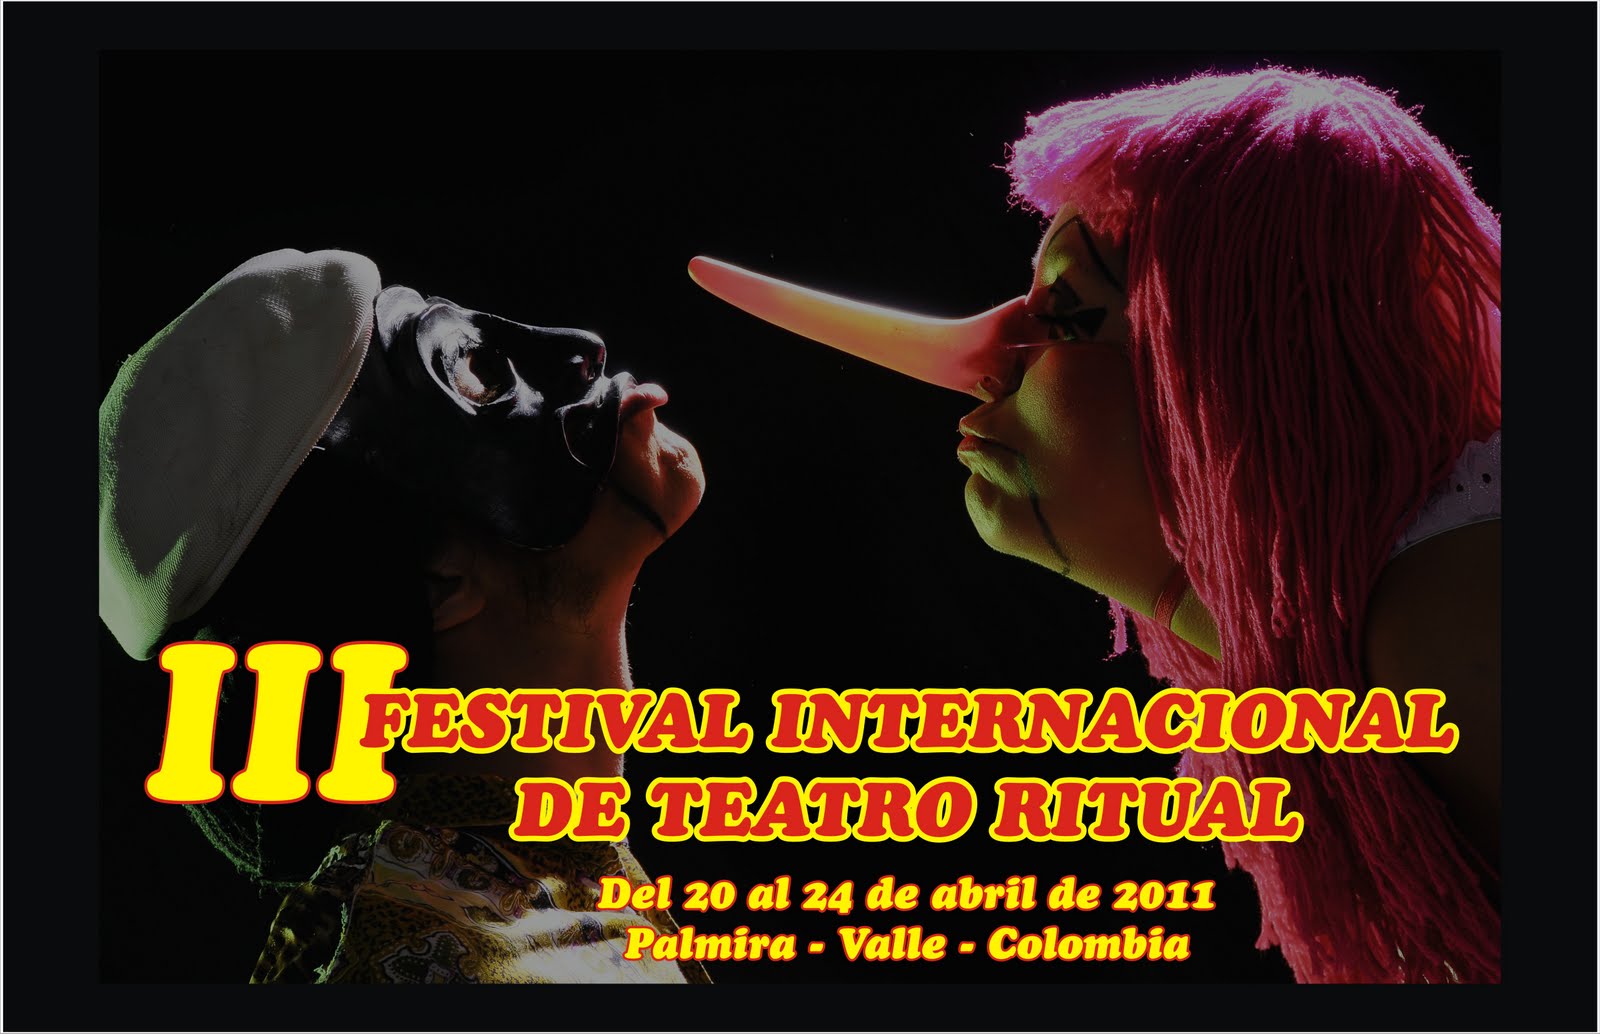 III FESTIVAL INTERNACIONAL DE TEATRO RITUAL